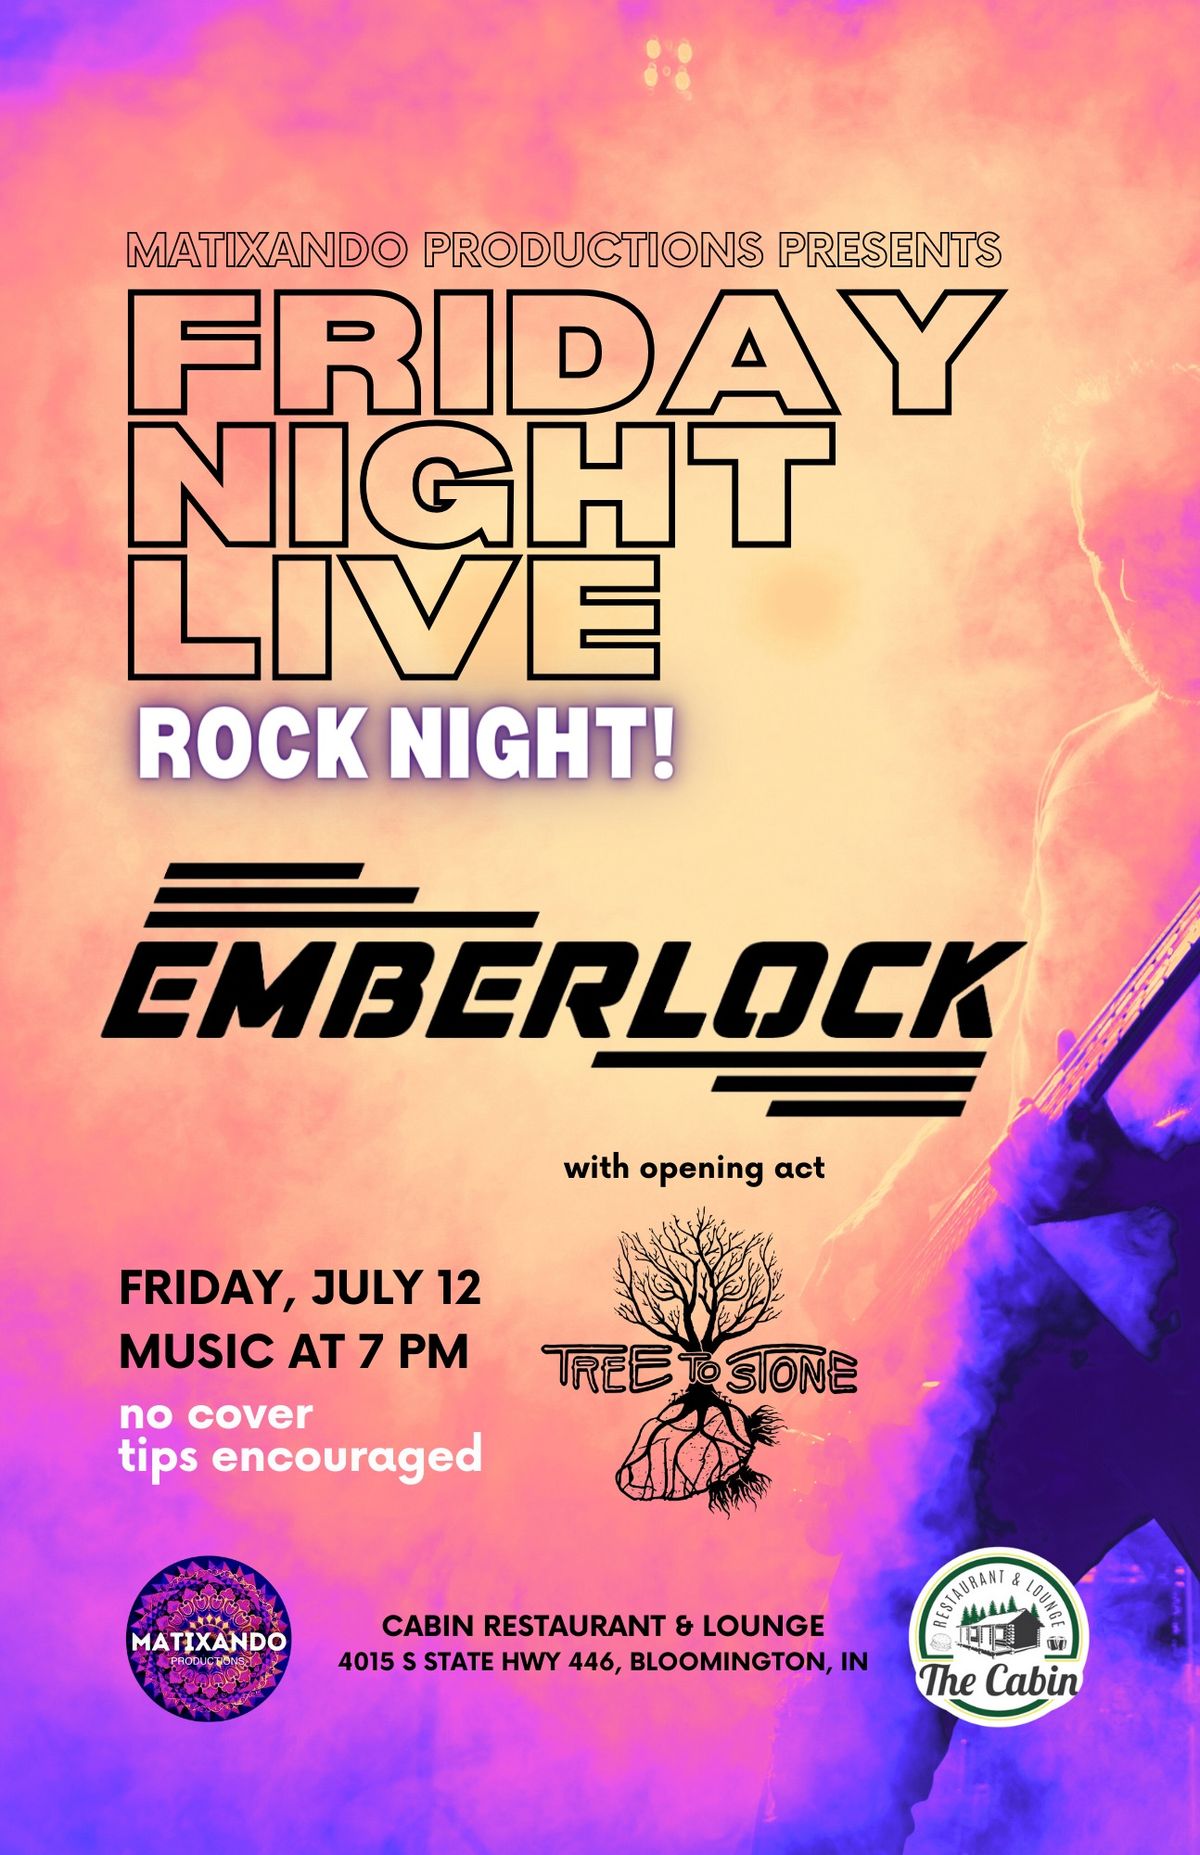 Rock Night at The Cabin EMBERLOCK & TREE To STONE